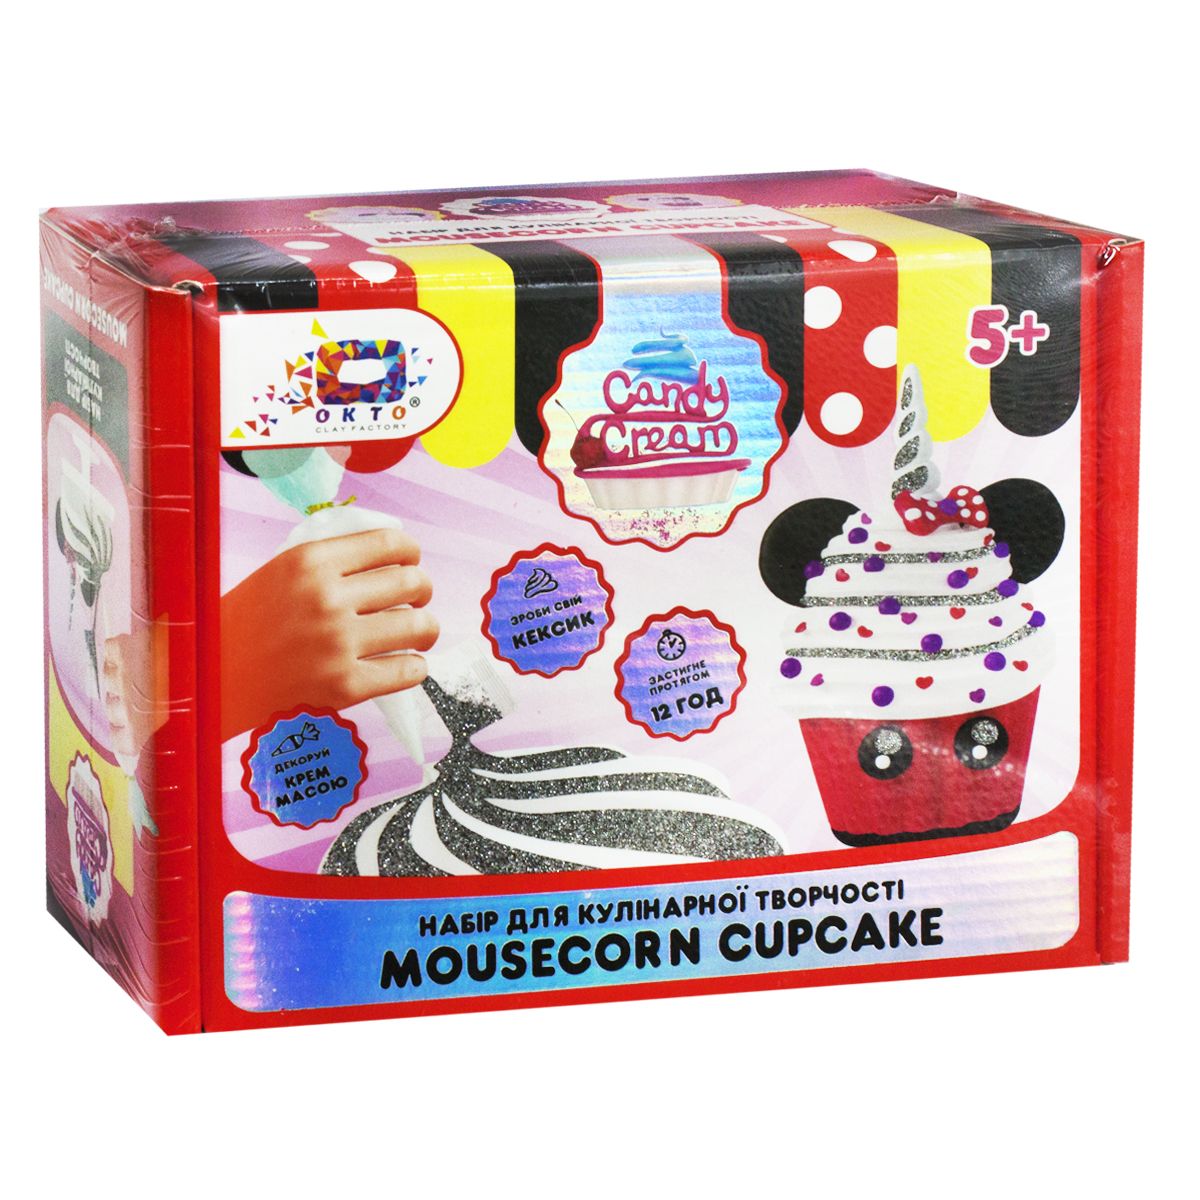 Набір для творчості "Candy cream.  Mousecorn Cupcake"